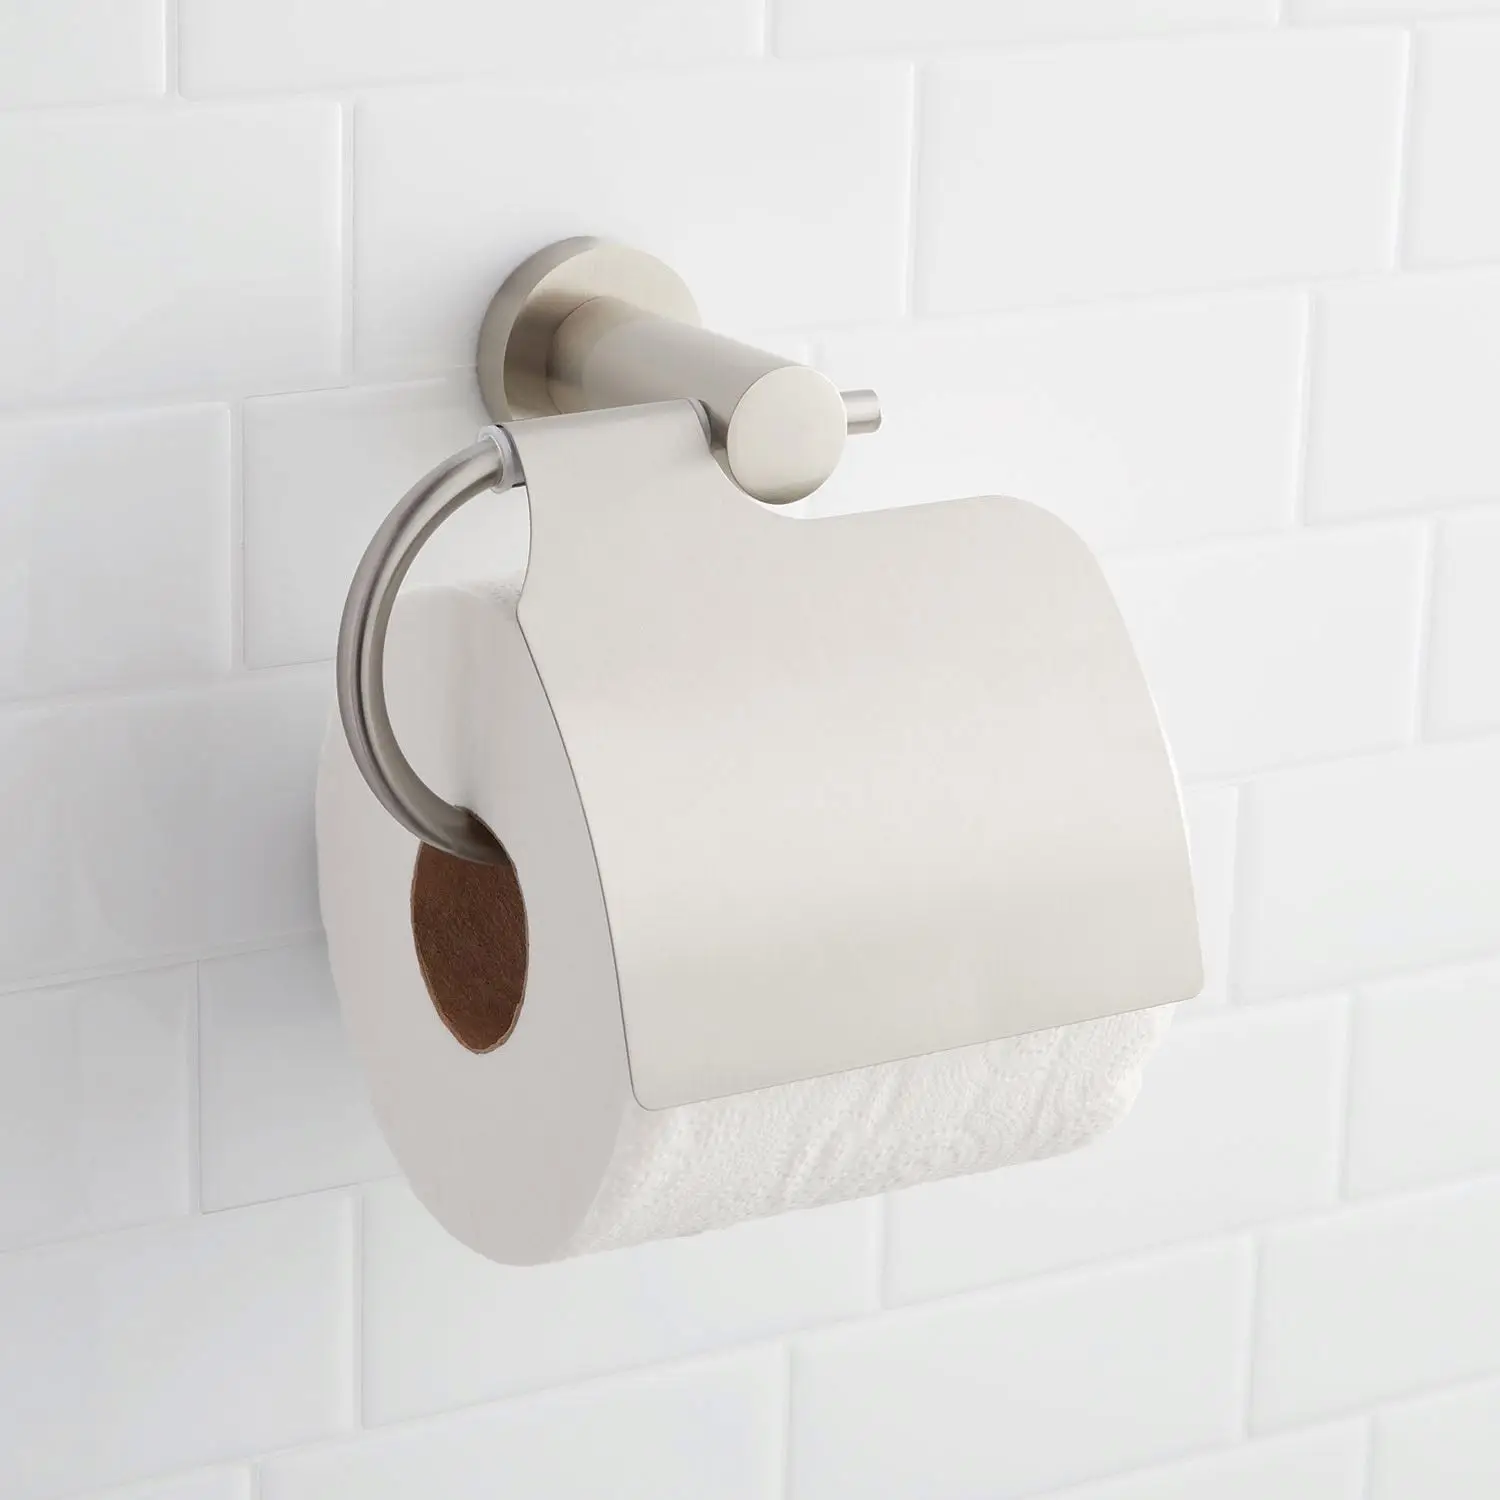 China Paper Towel Portable Toilet Europe